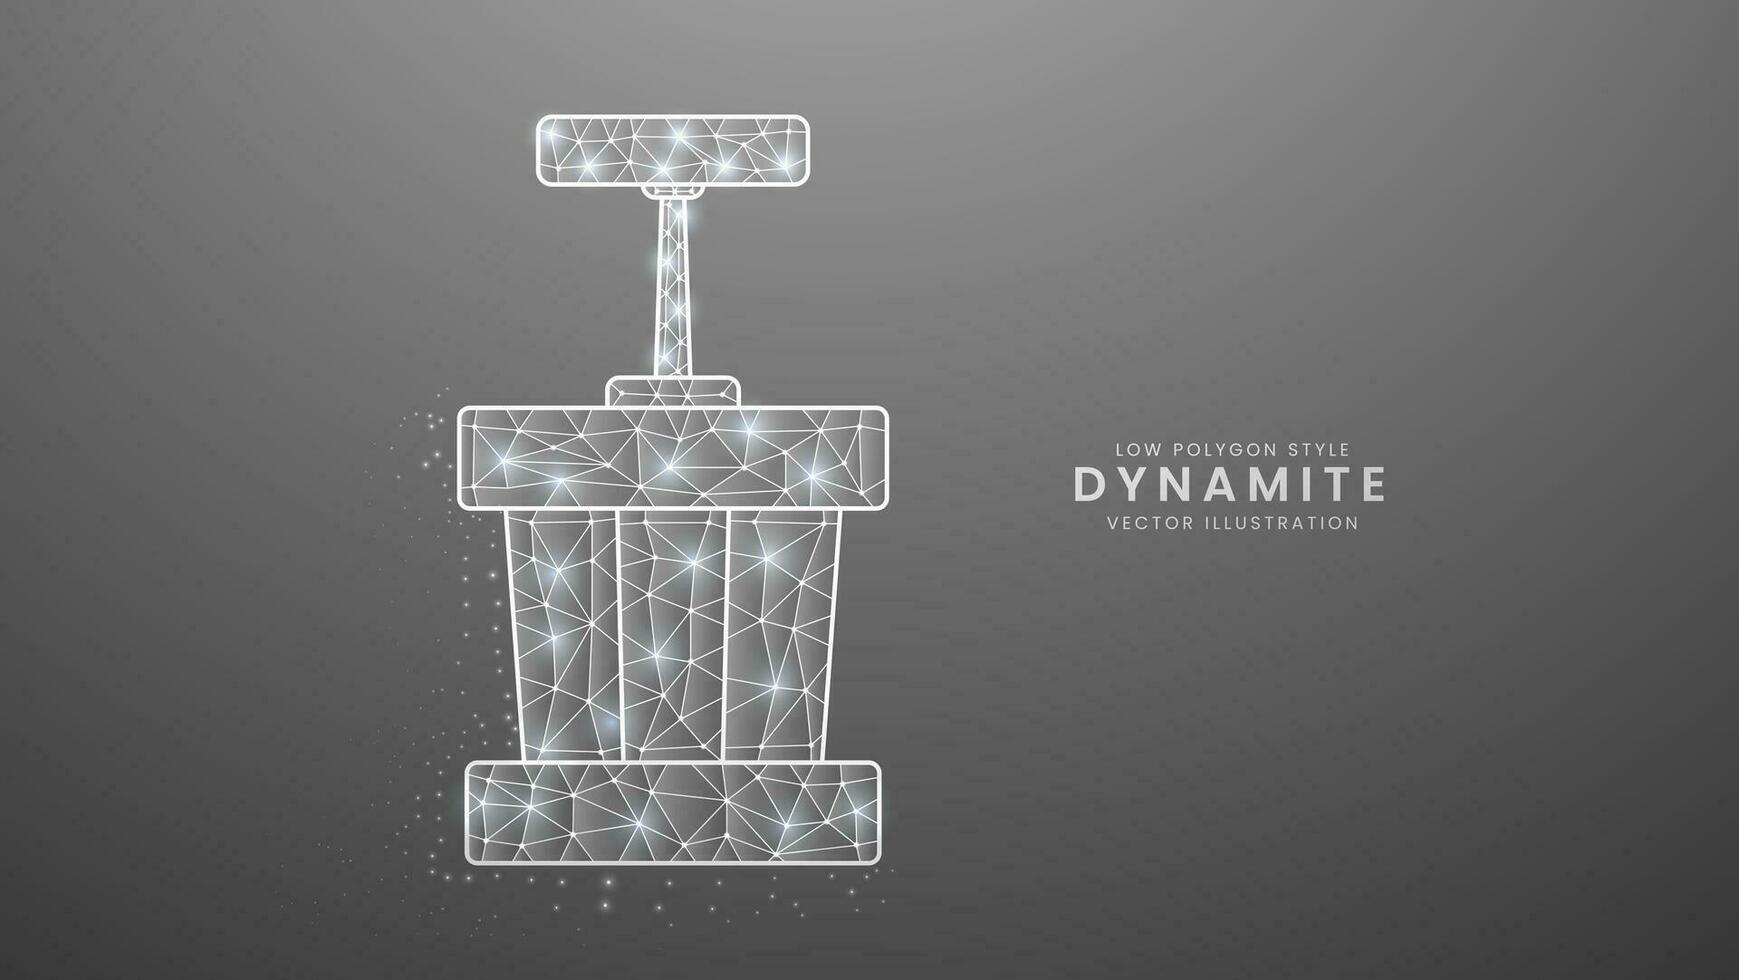 Dynamite bomb. Detonator box stick for dynamite, Modern digital low polygon style vector illustration